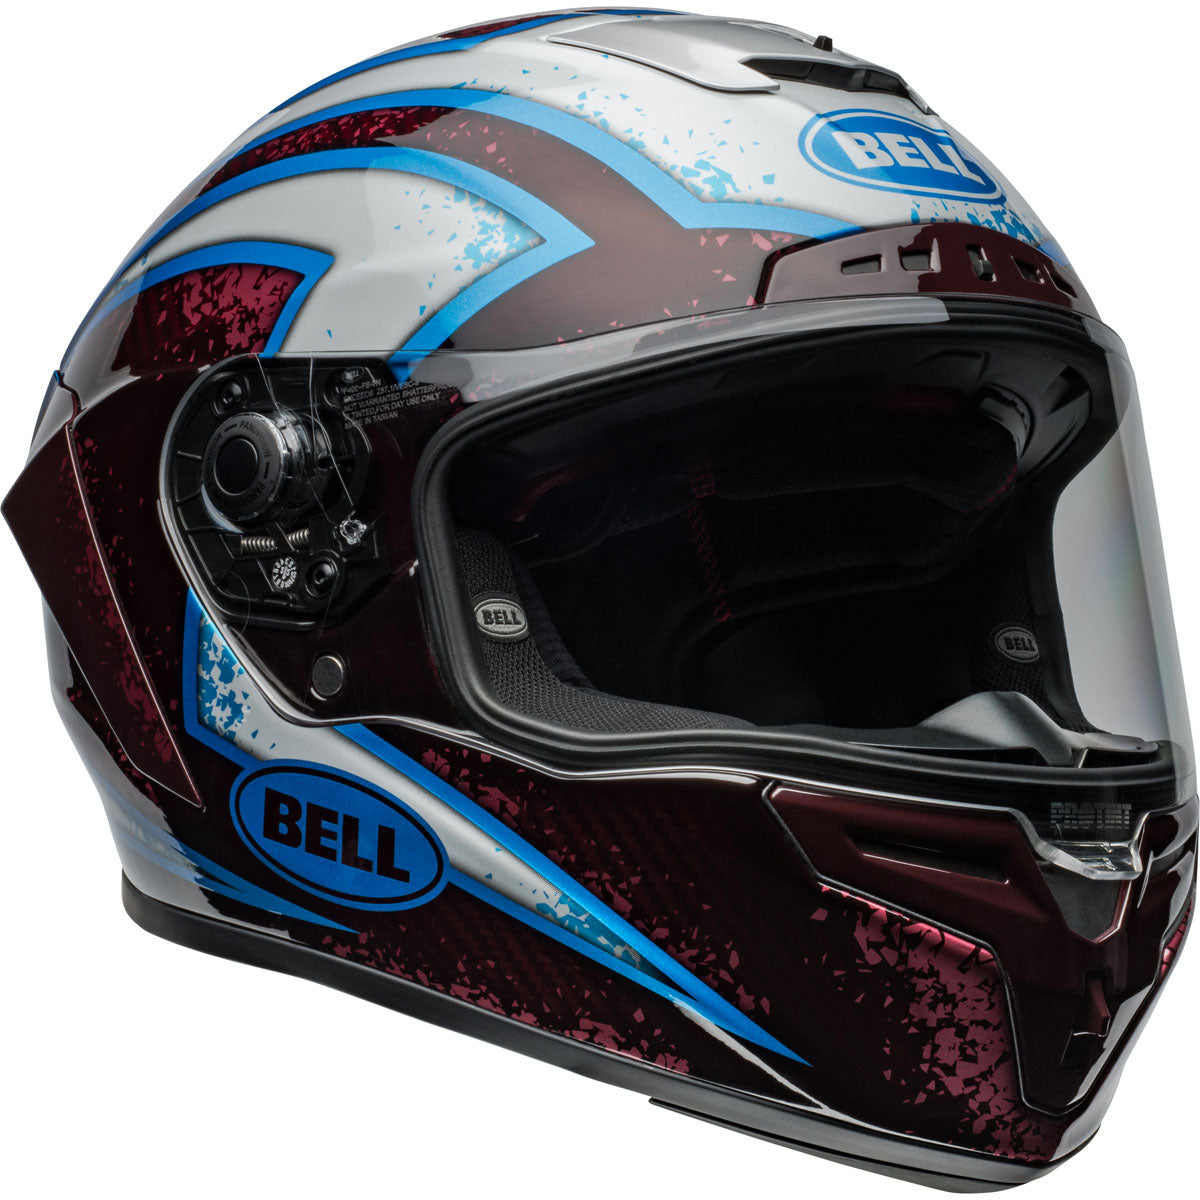 Bell Race Star DLX Flex Xenon Helmet - Gloss Red/Silver